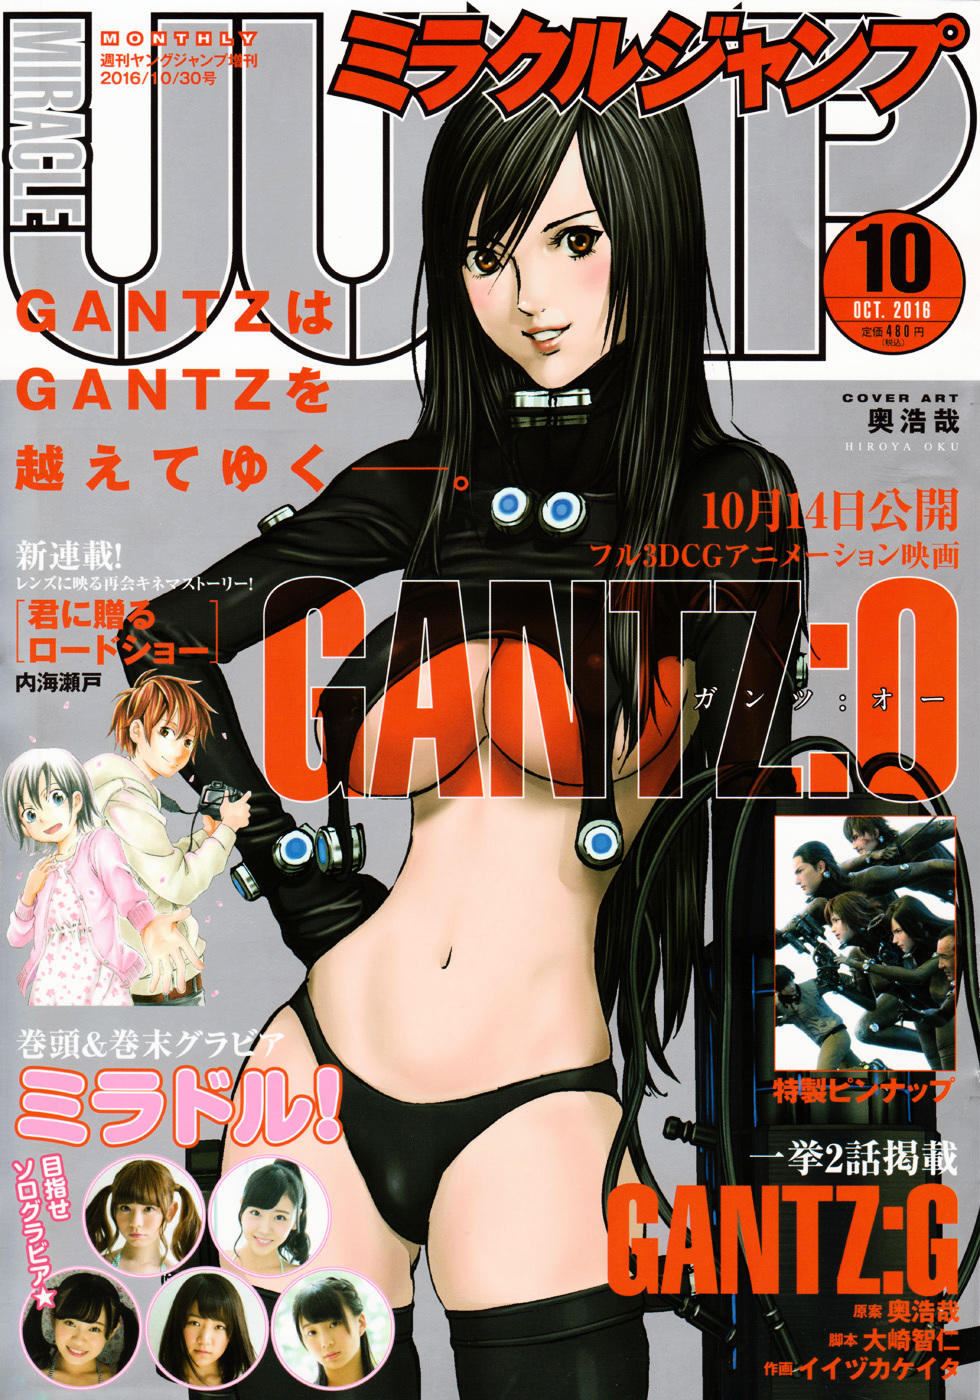 Gantz G Chapter 11 Read Gantz G Chapter 11 Online At Allmanga Us Page 1